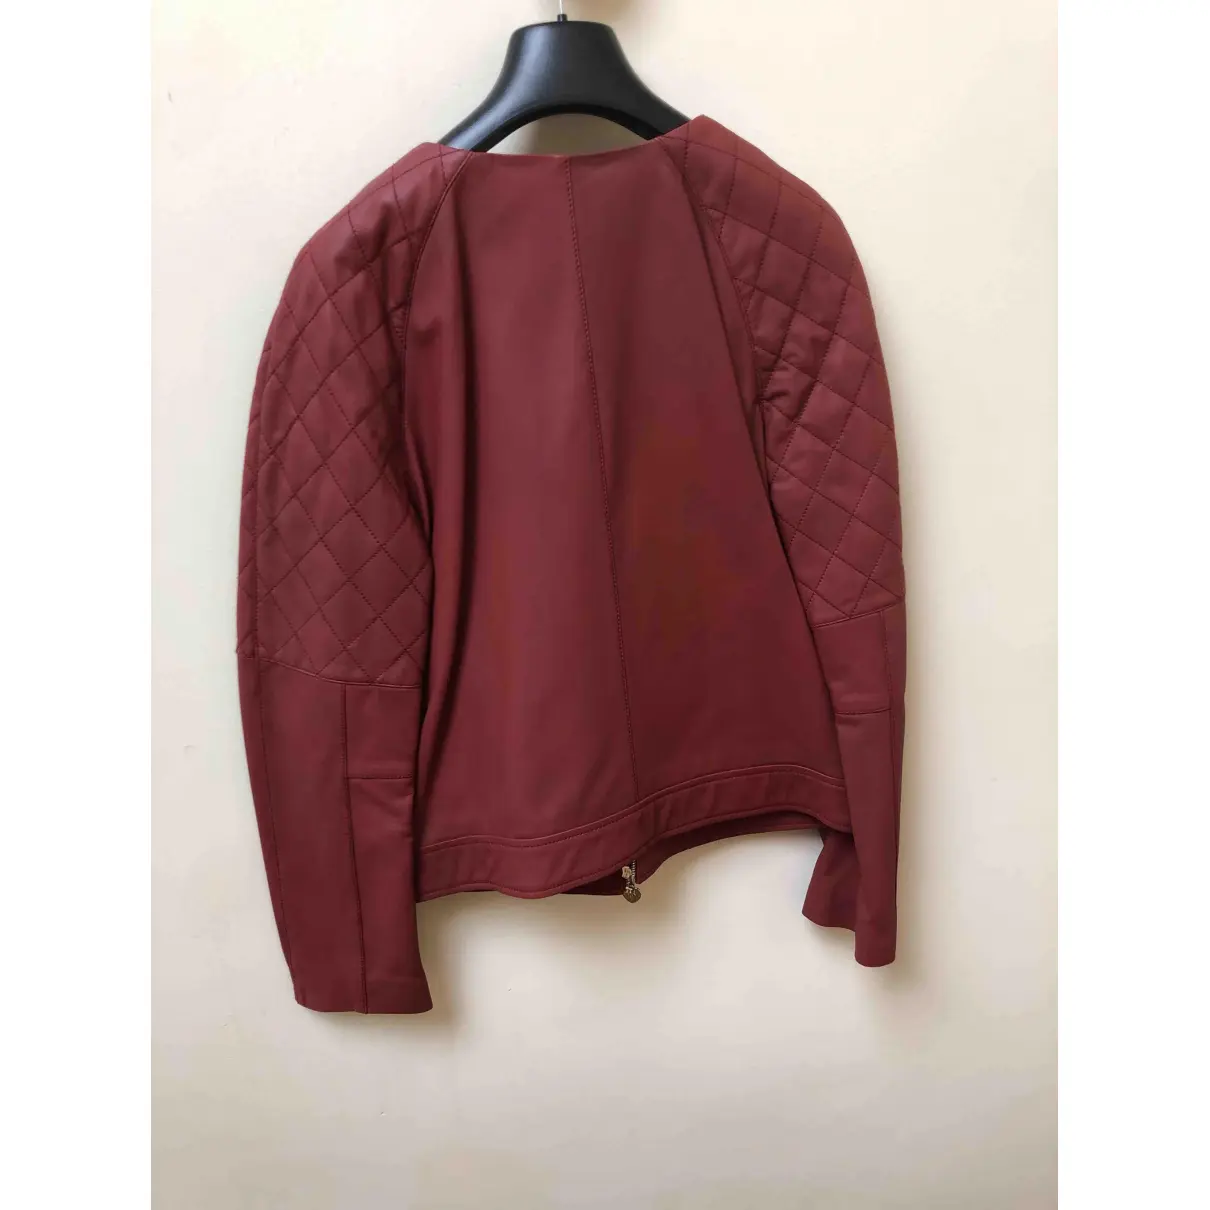 Buy Twinset Leather jacket online